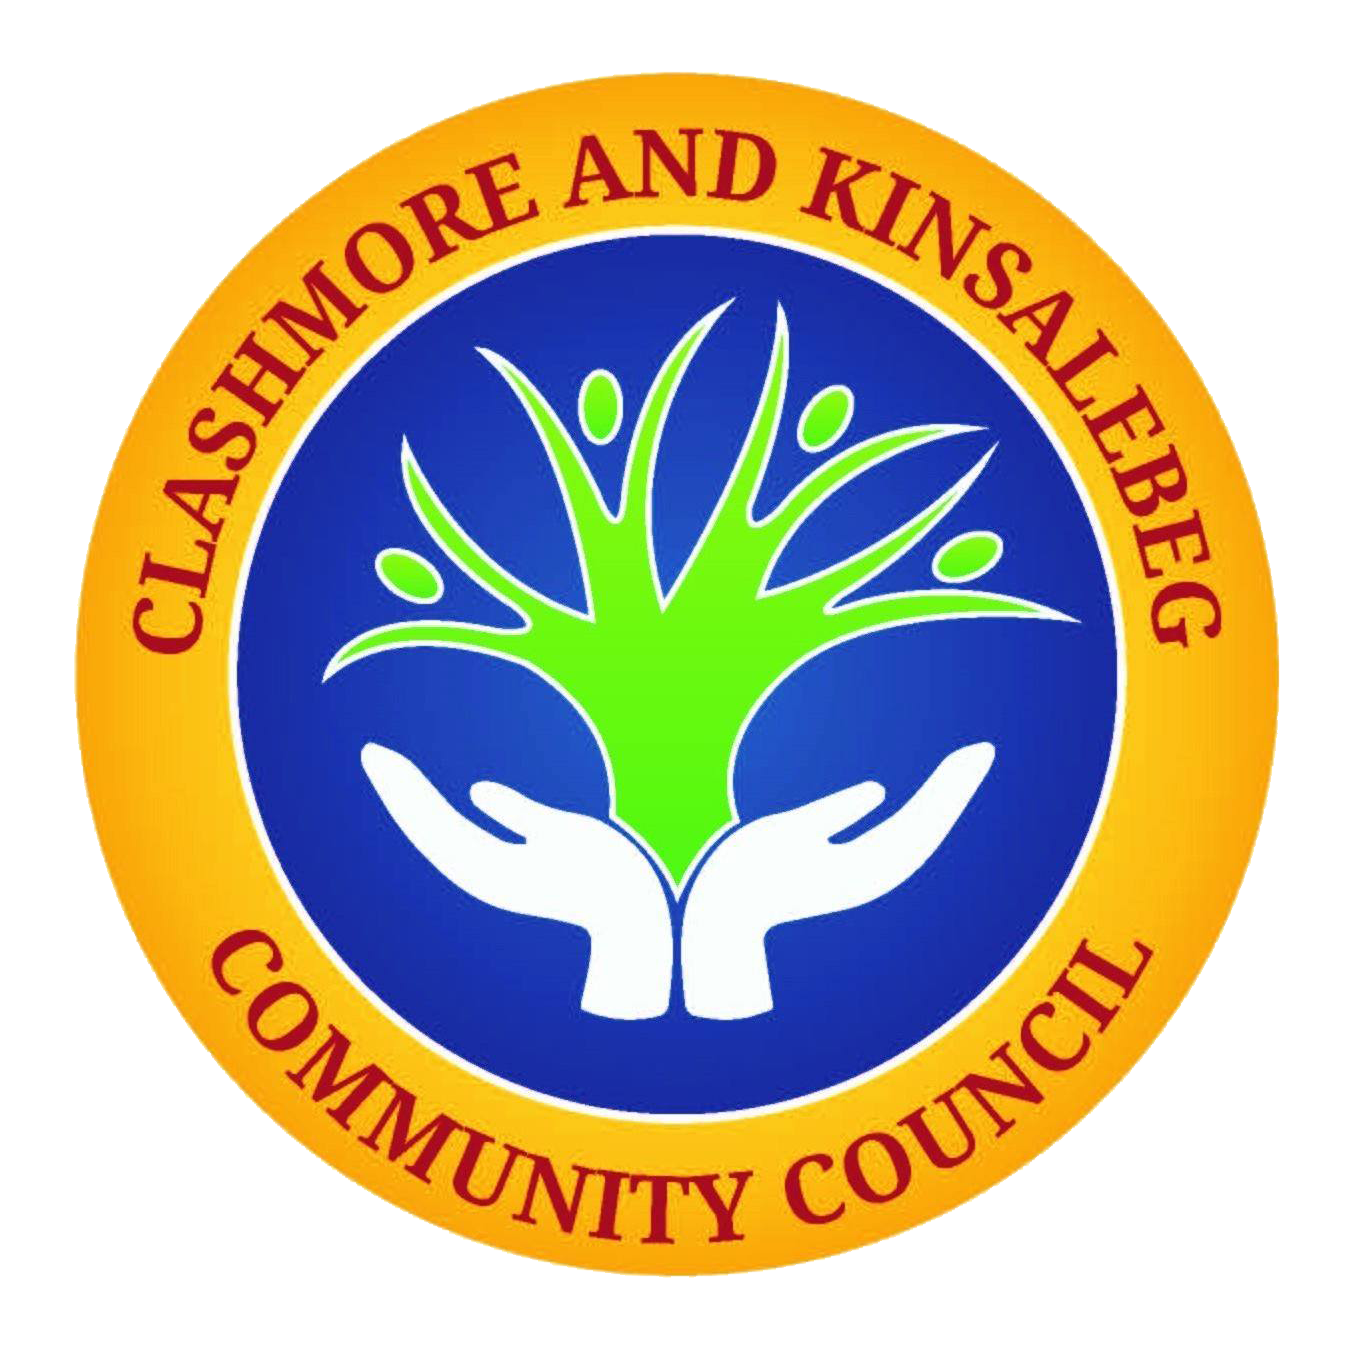 CLASHMORE & KINSALEBEG COMMUNITY COUNCIL